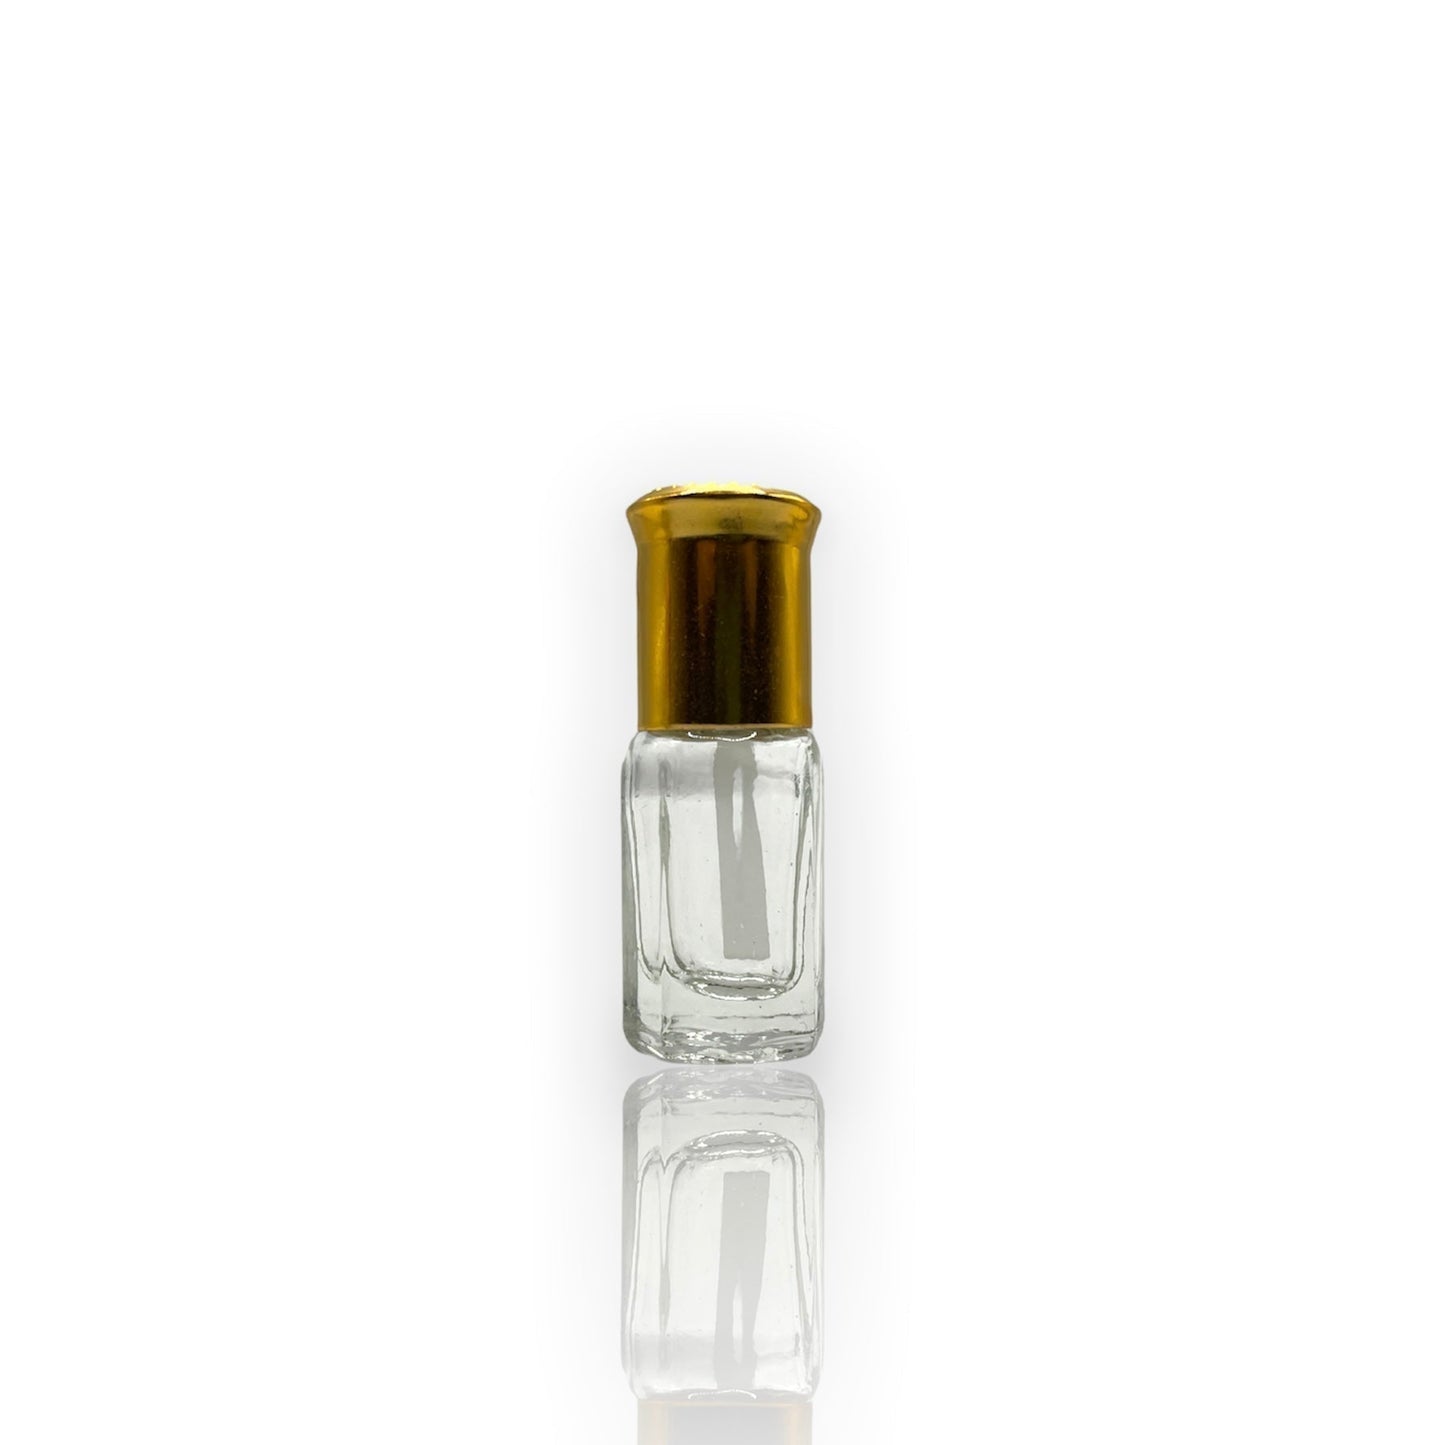 O-02 Oil Perfume *Inspired by Mukhallat Omani